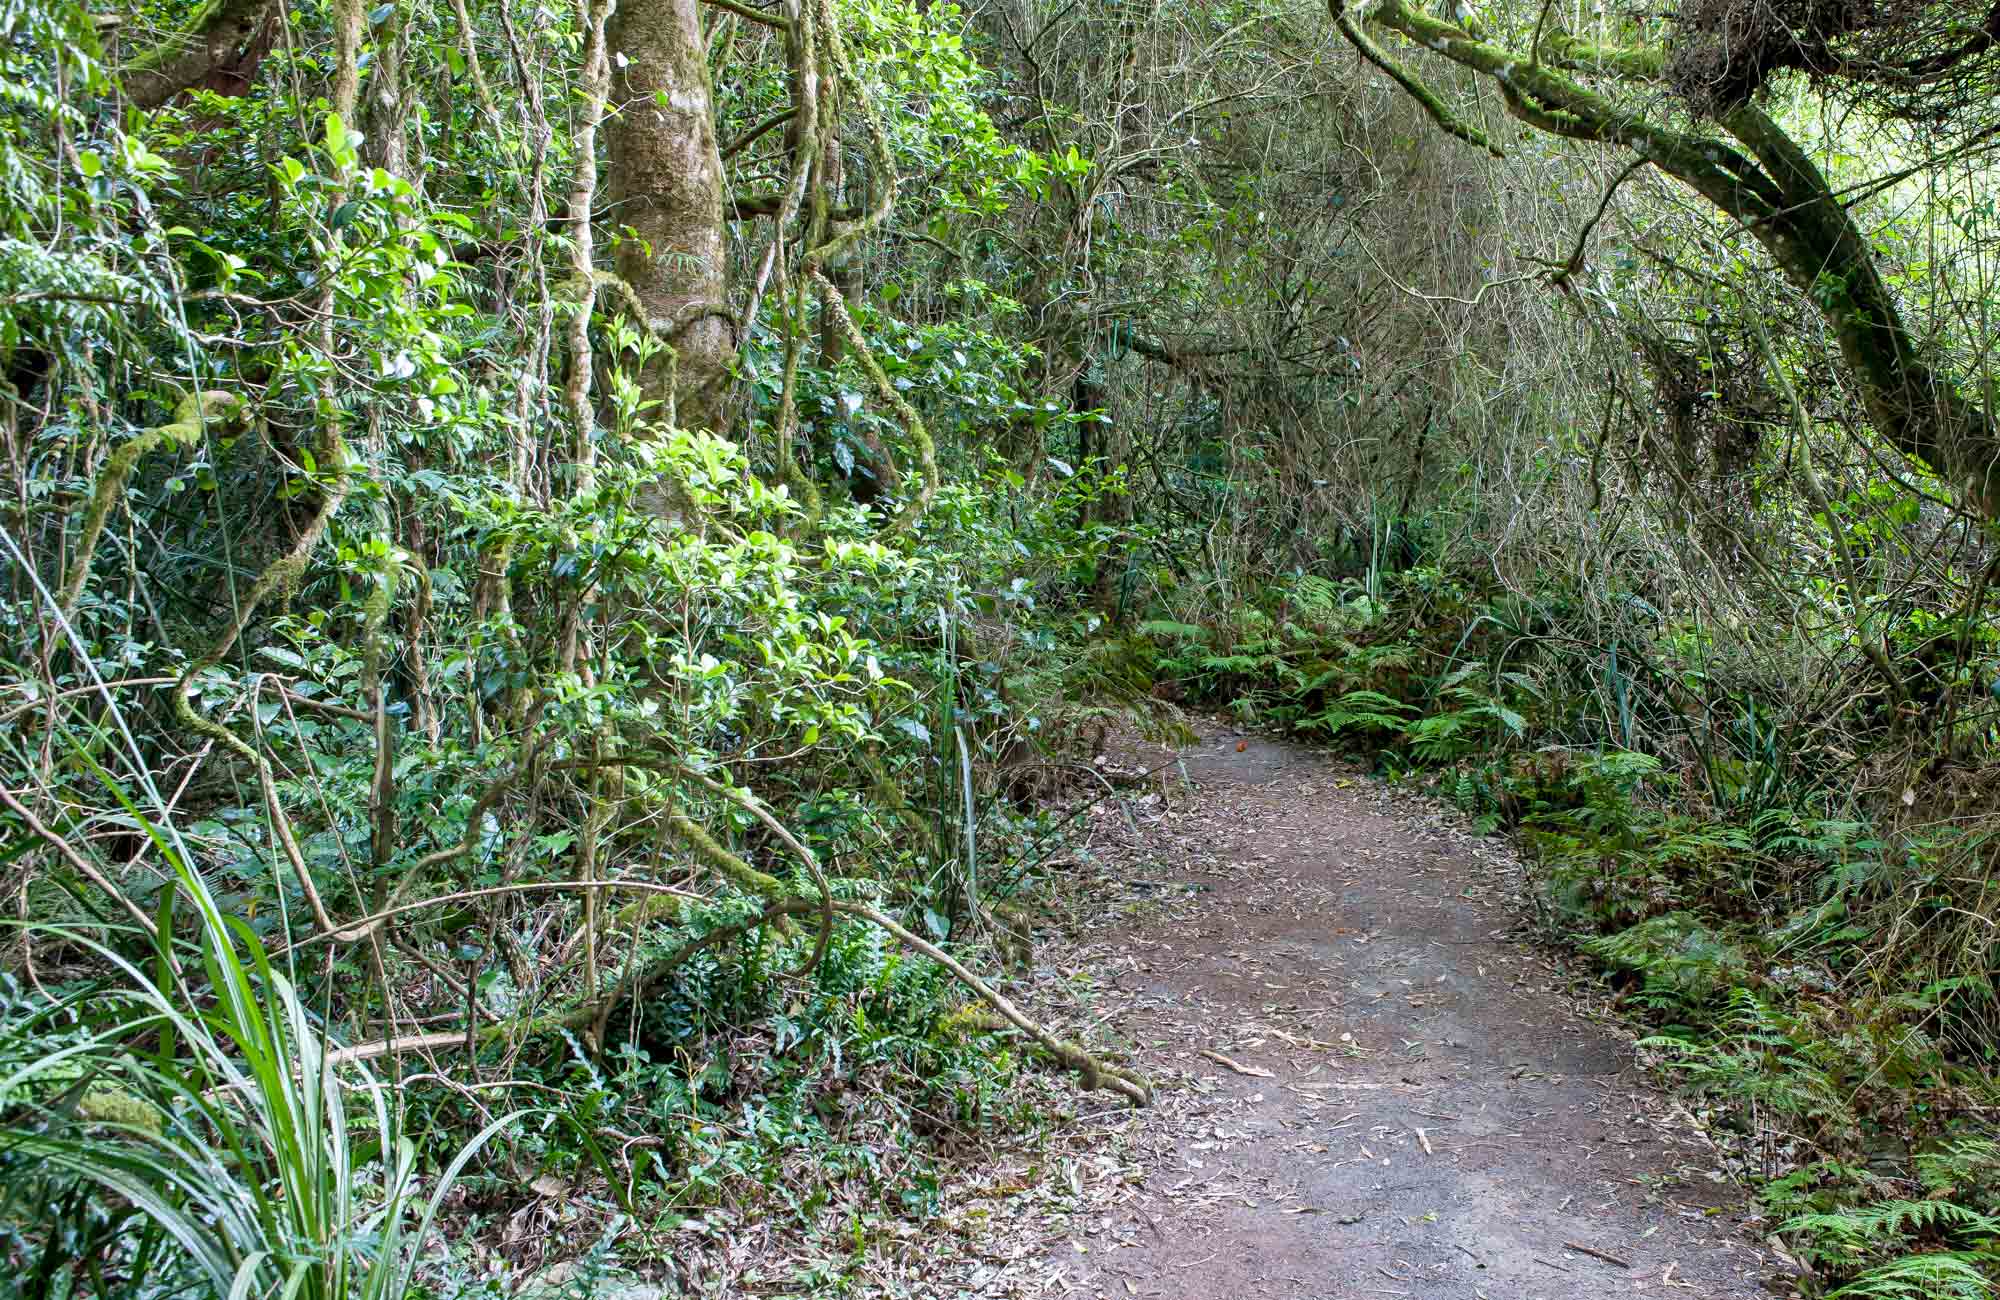 Rainforest walking track, Robertson Nature Reserve. Photo: Michael van Ewijk